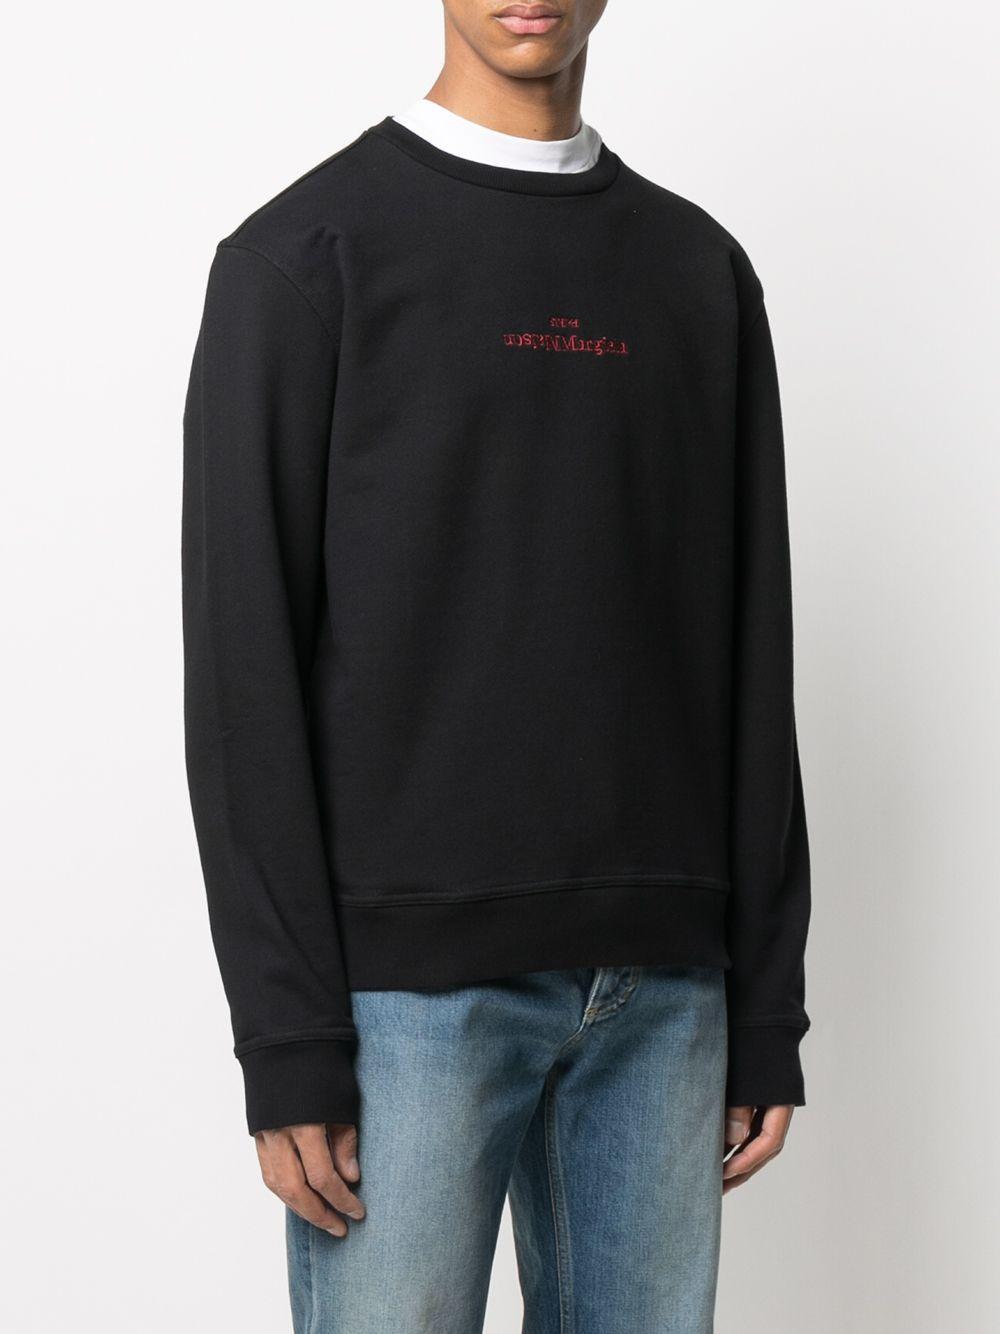 Maison Margiela Logo-embroidered Sweatshirt in Black for Men - Lyst